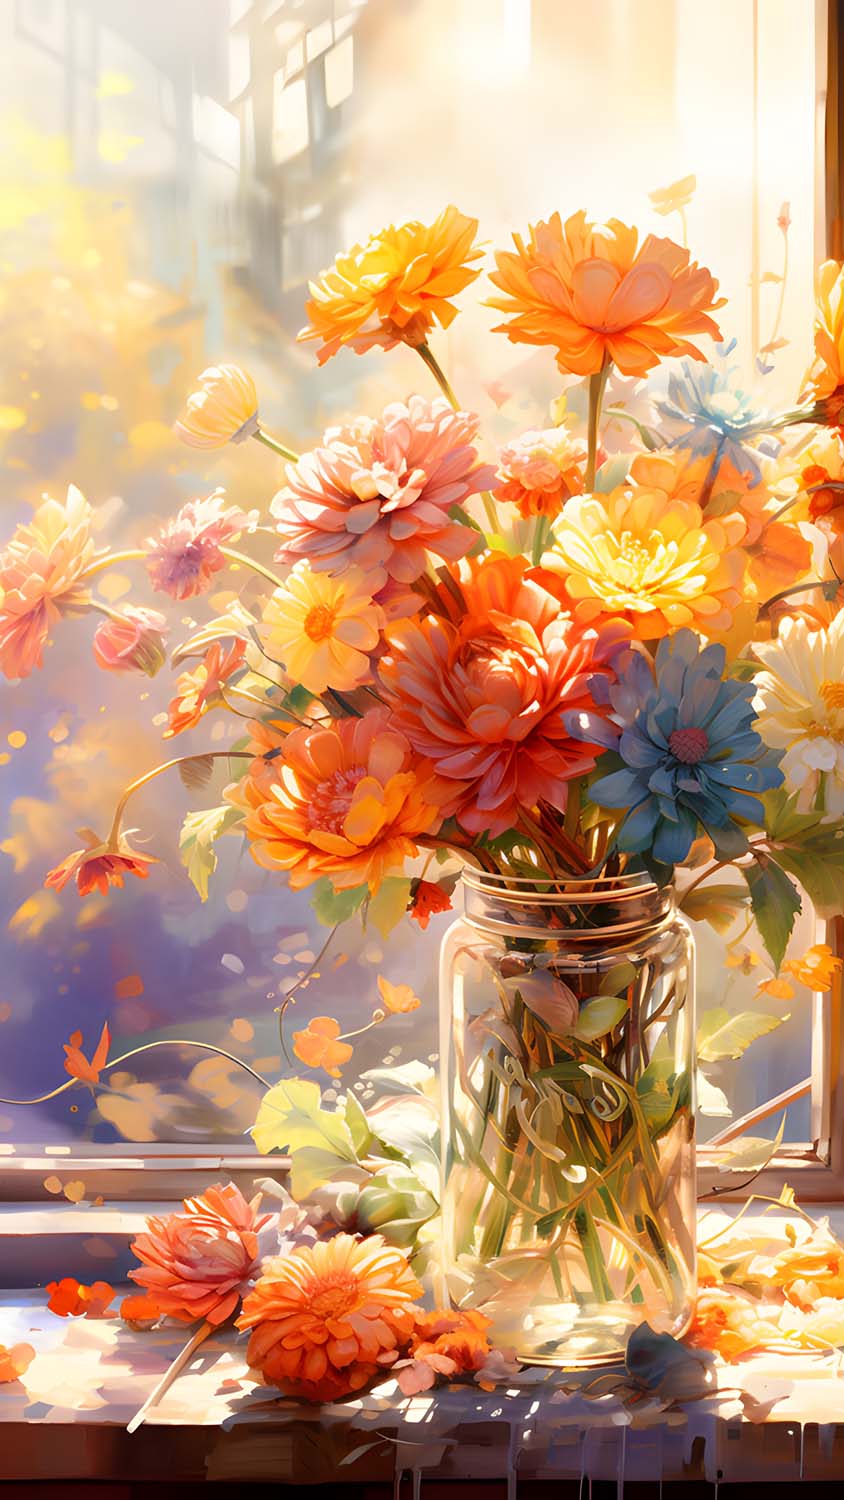 Sunshine Flowers iPhone Wallpaper HD